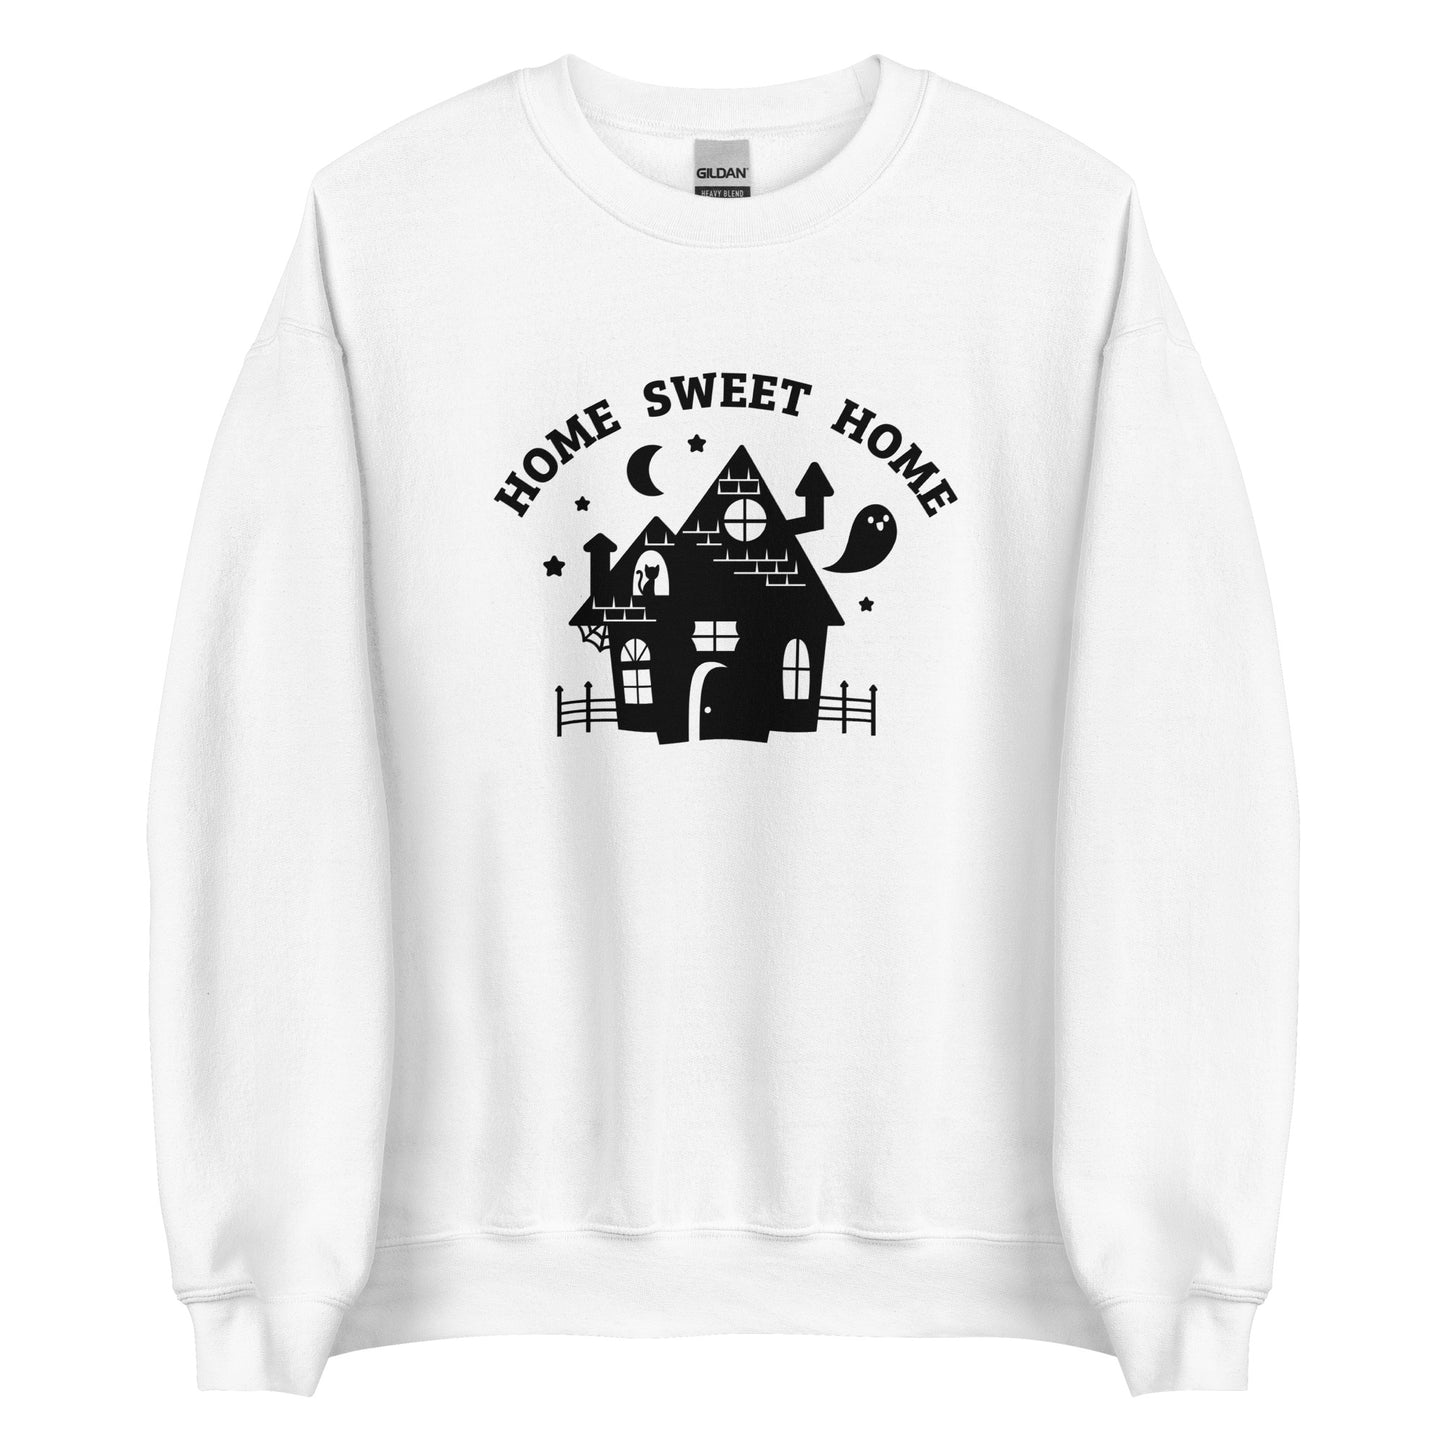 "Home Sweet Home" Haunted House Sweatshirt